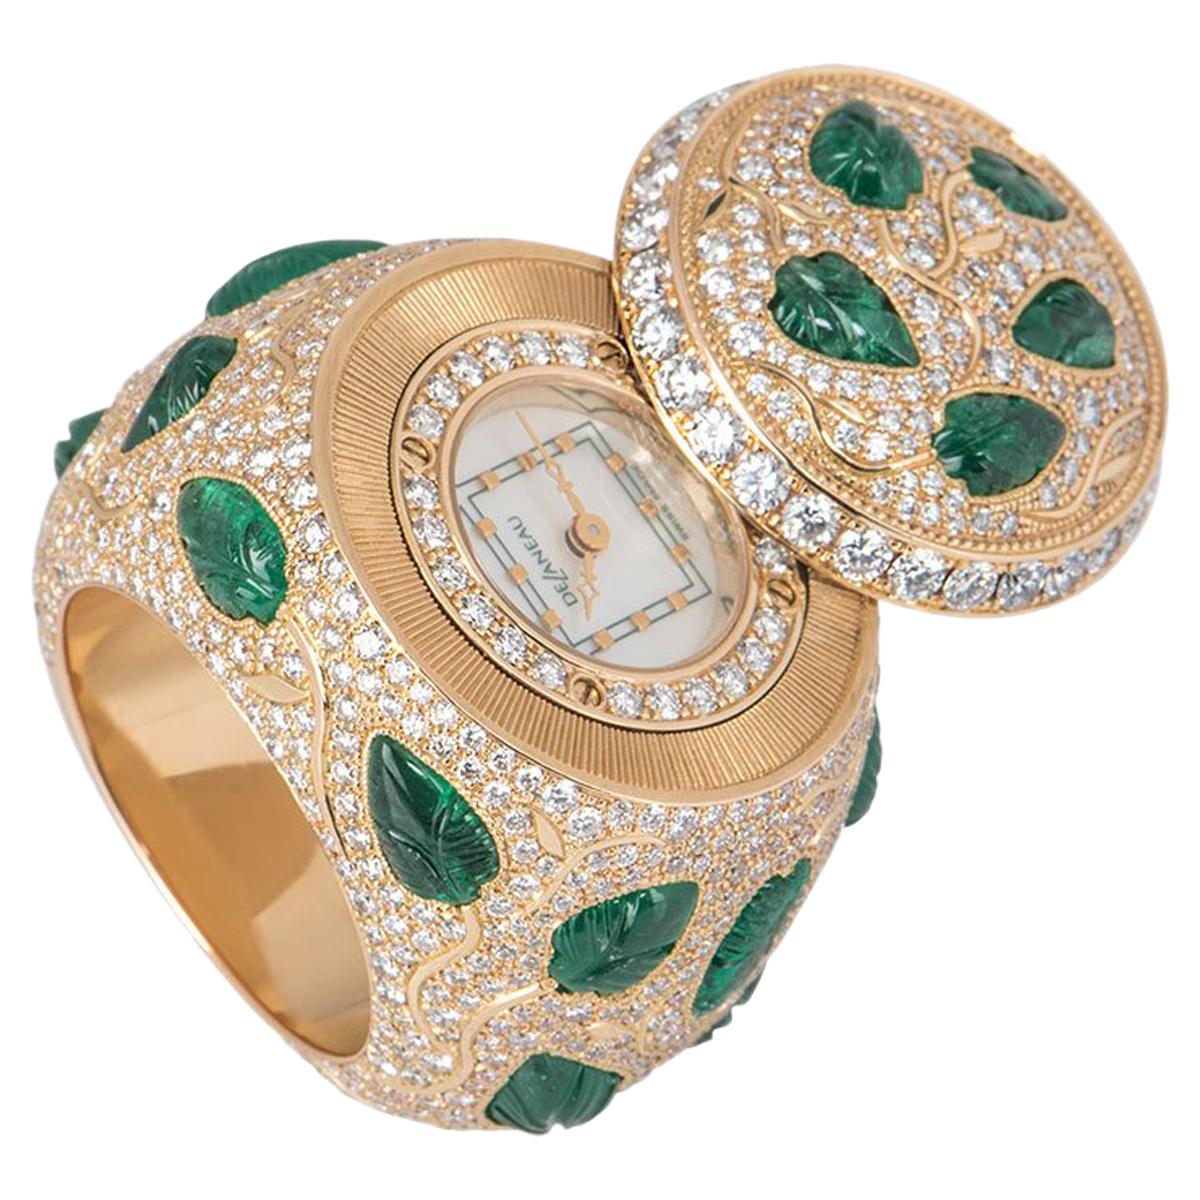 Rare DeLaneau Rose Gold, Diamond and Emerald Ring Watch 7.60 Carat IGR Certified